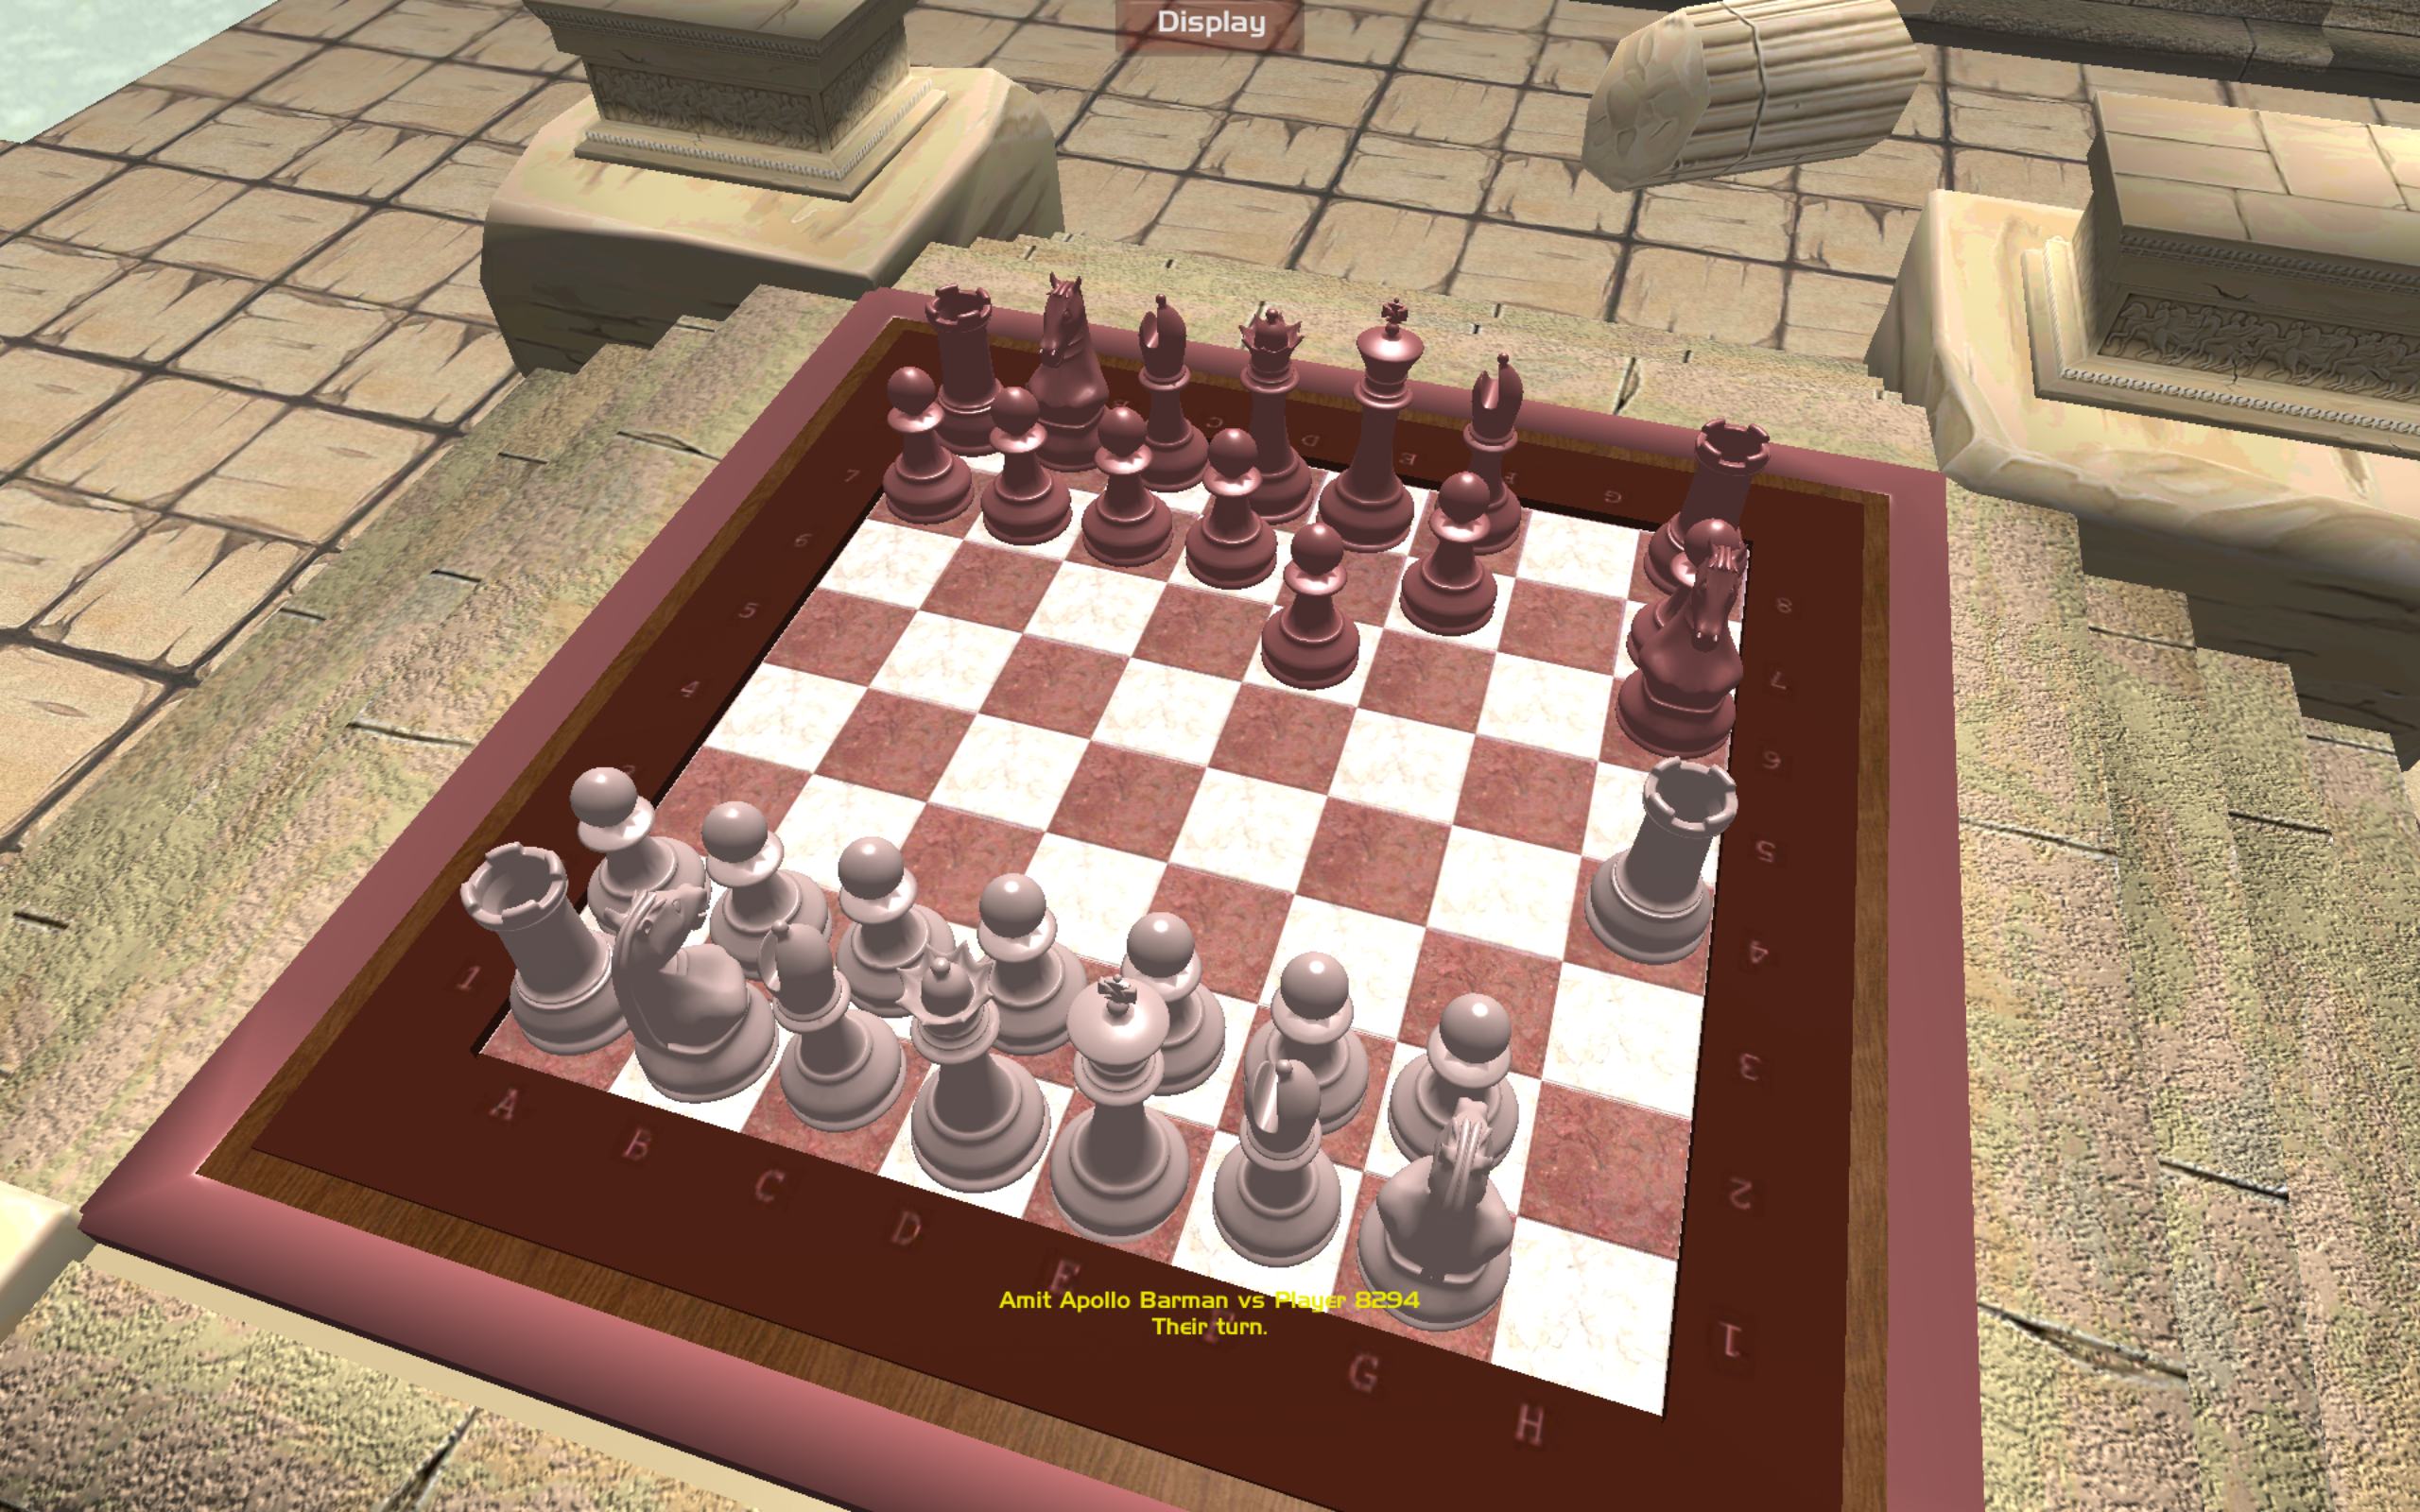 Chess King遊戲截圖